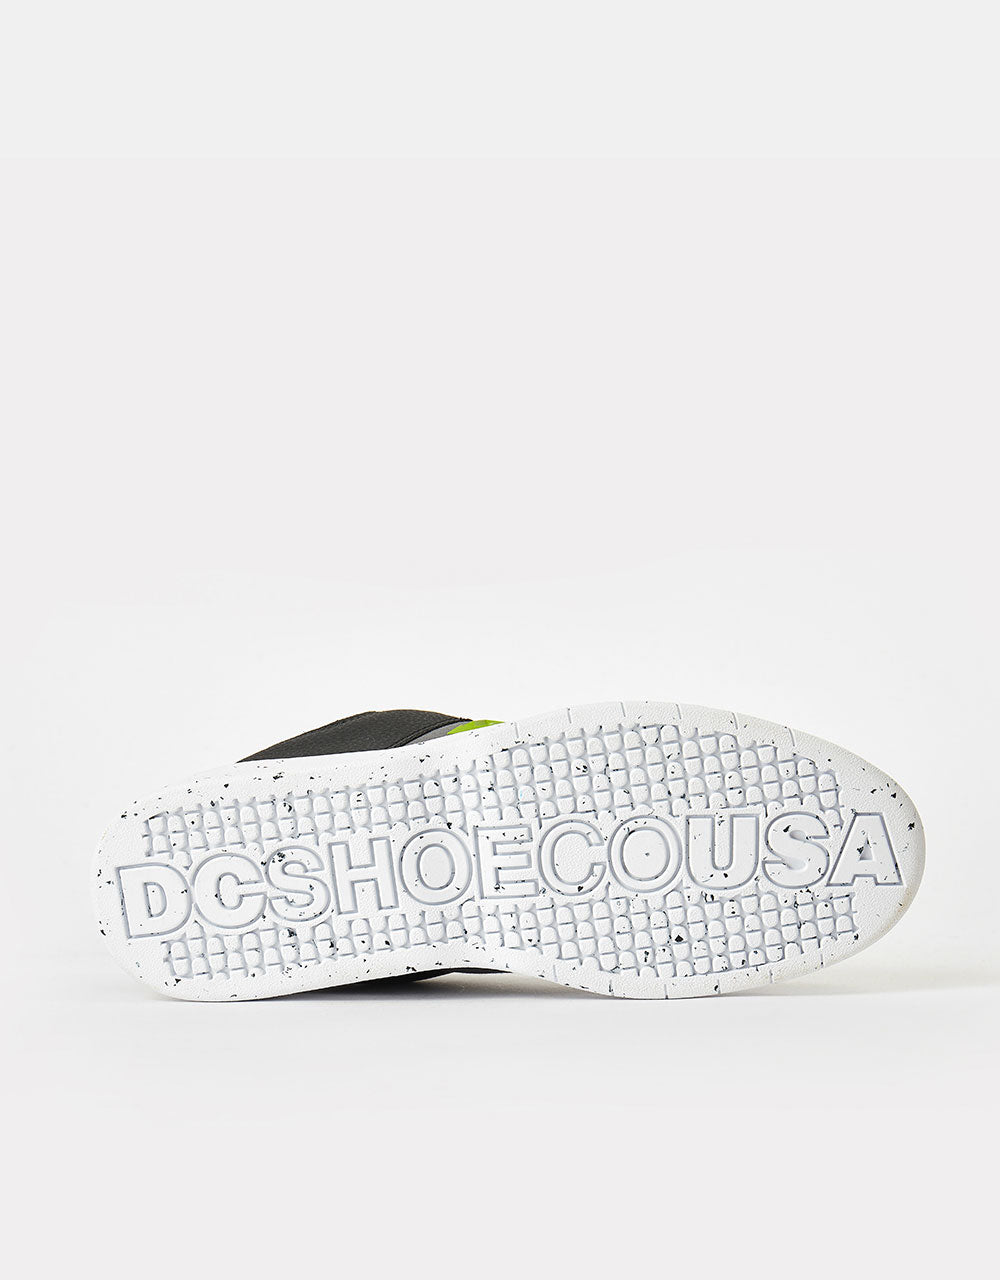 DC Lynx Zero Waste Skate Shoes - Black/Grey/Green